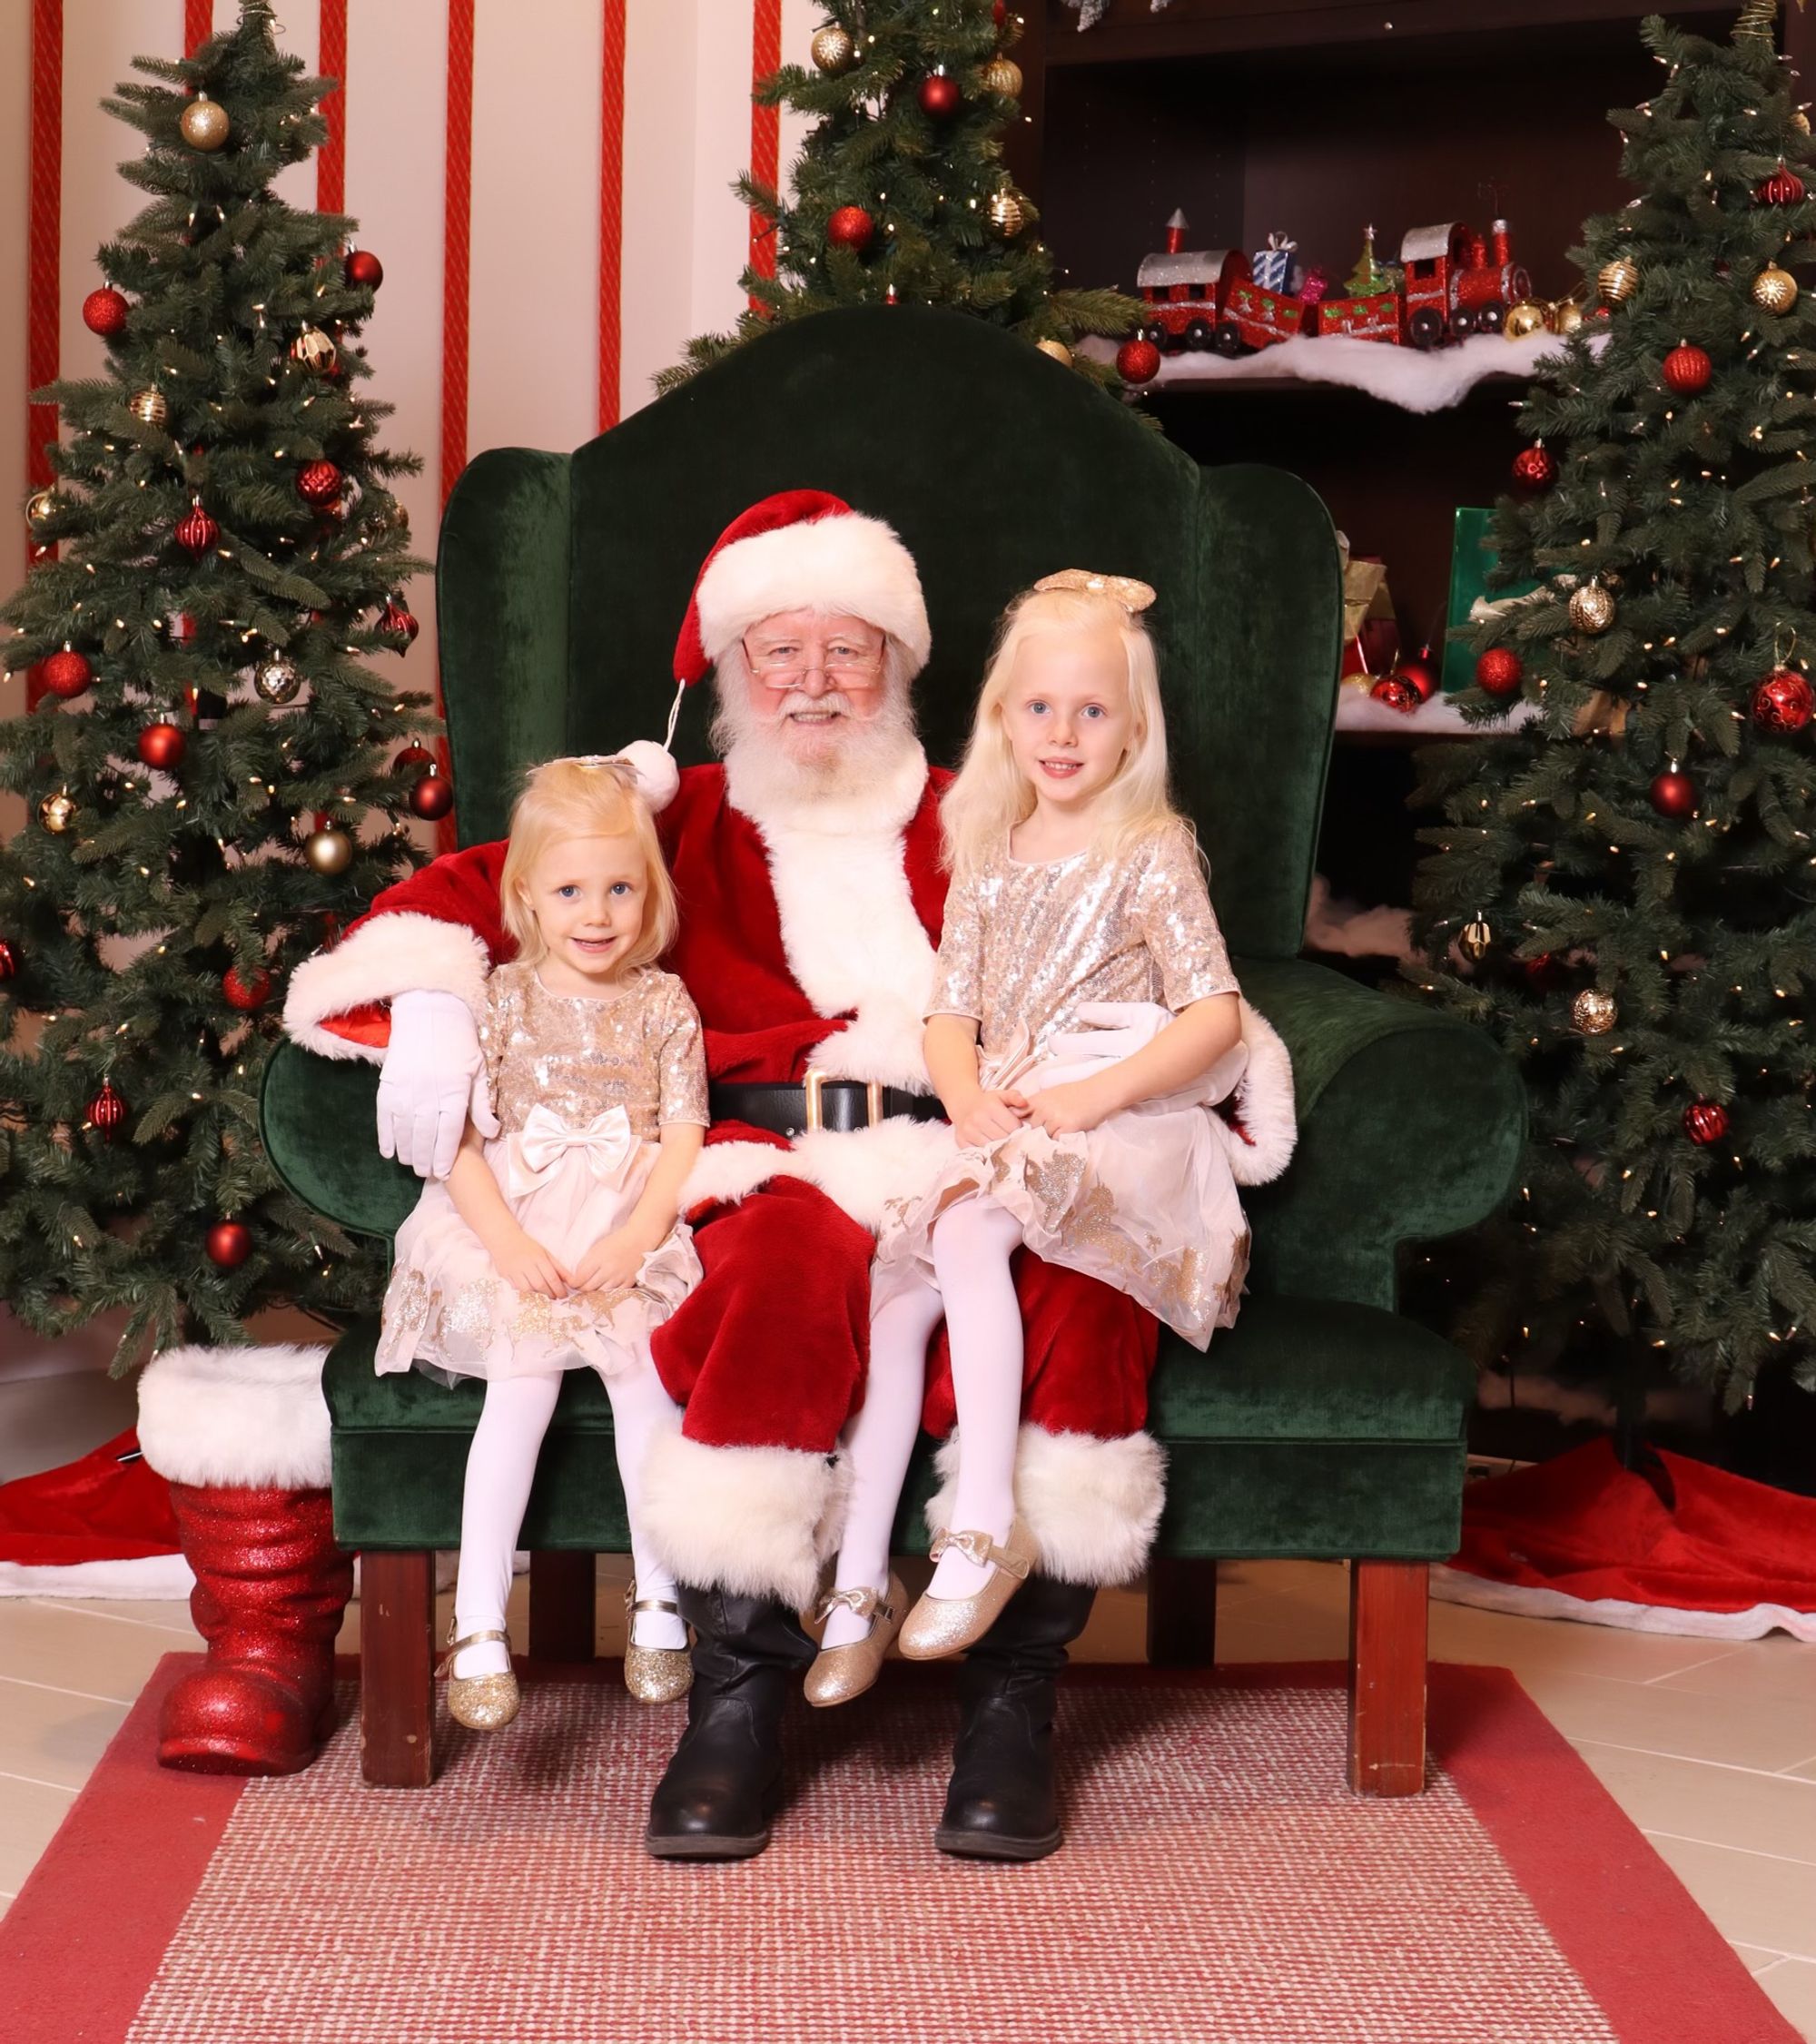 My girls with Santa